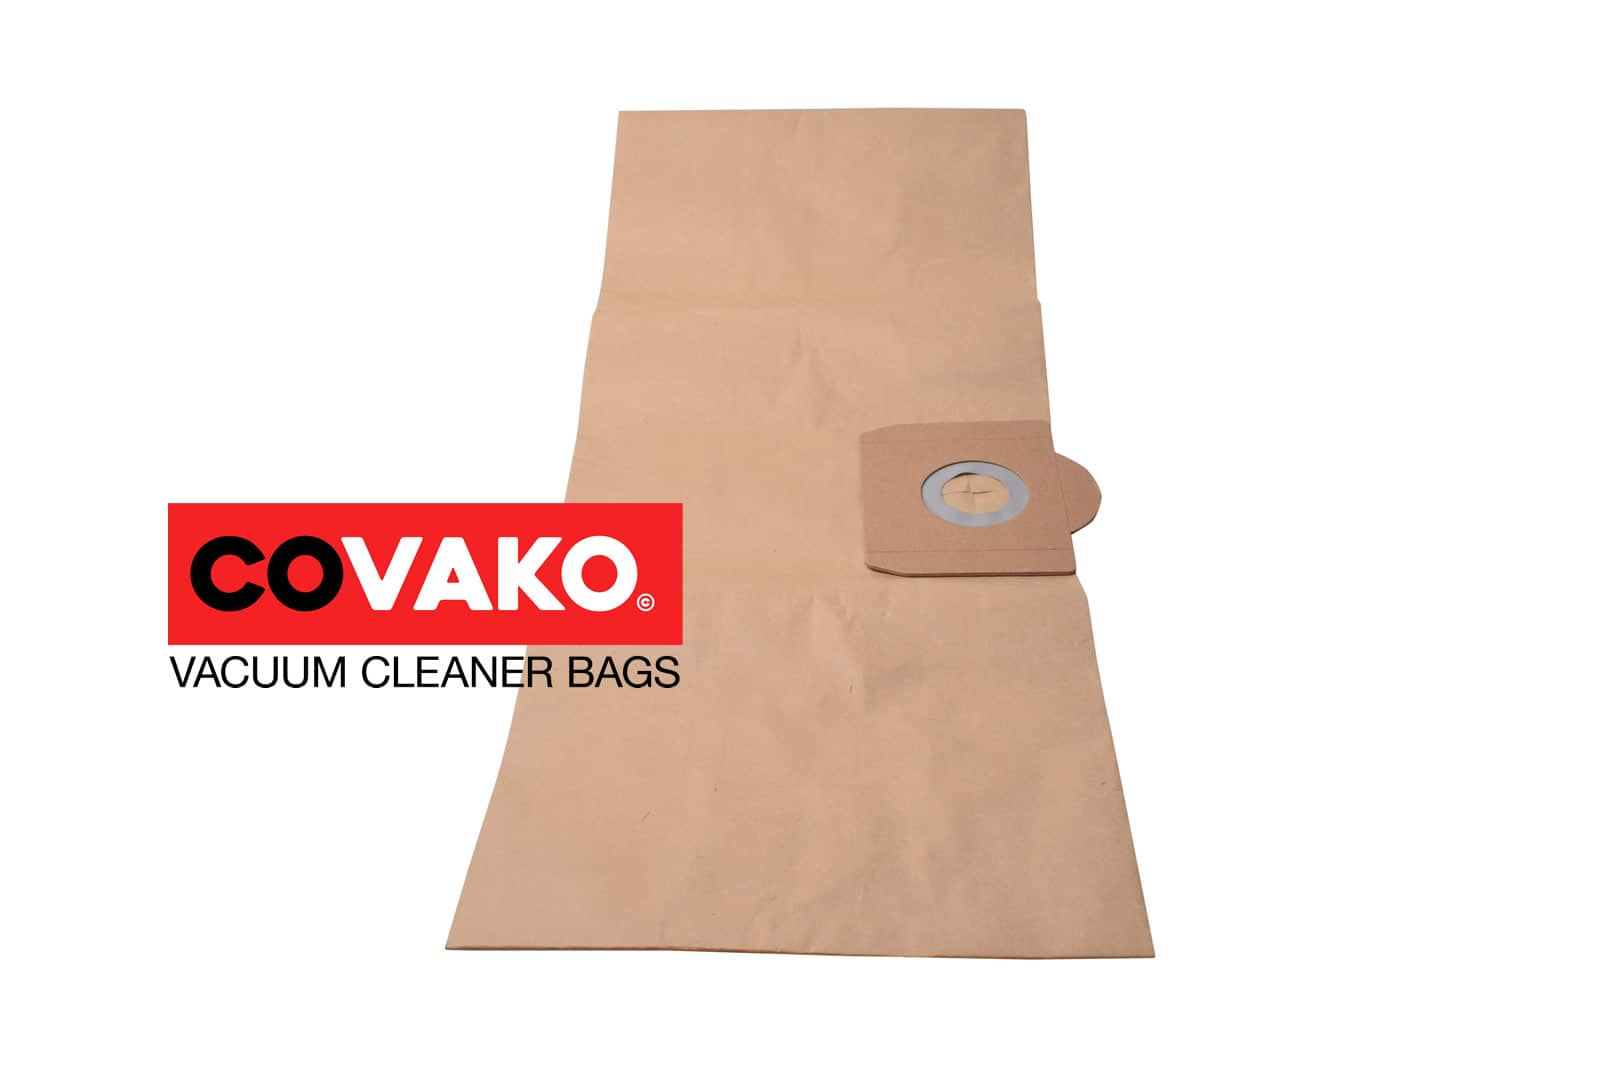 Elsea ares ADI 105 / Paper - Elsea vacuum cleaner bags